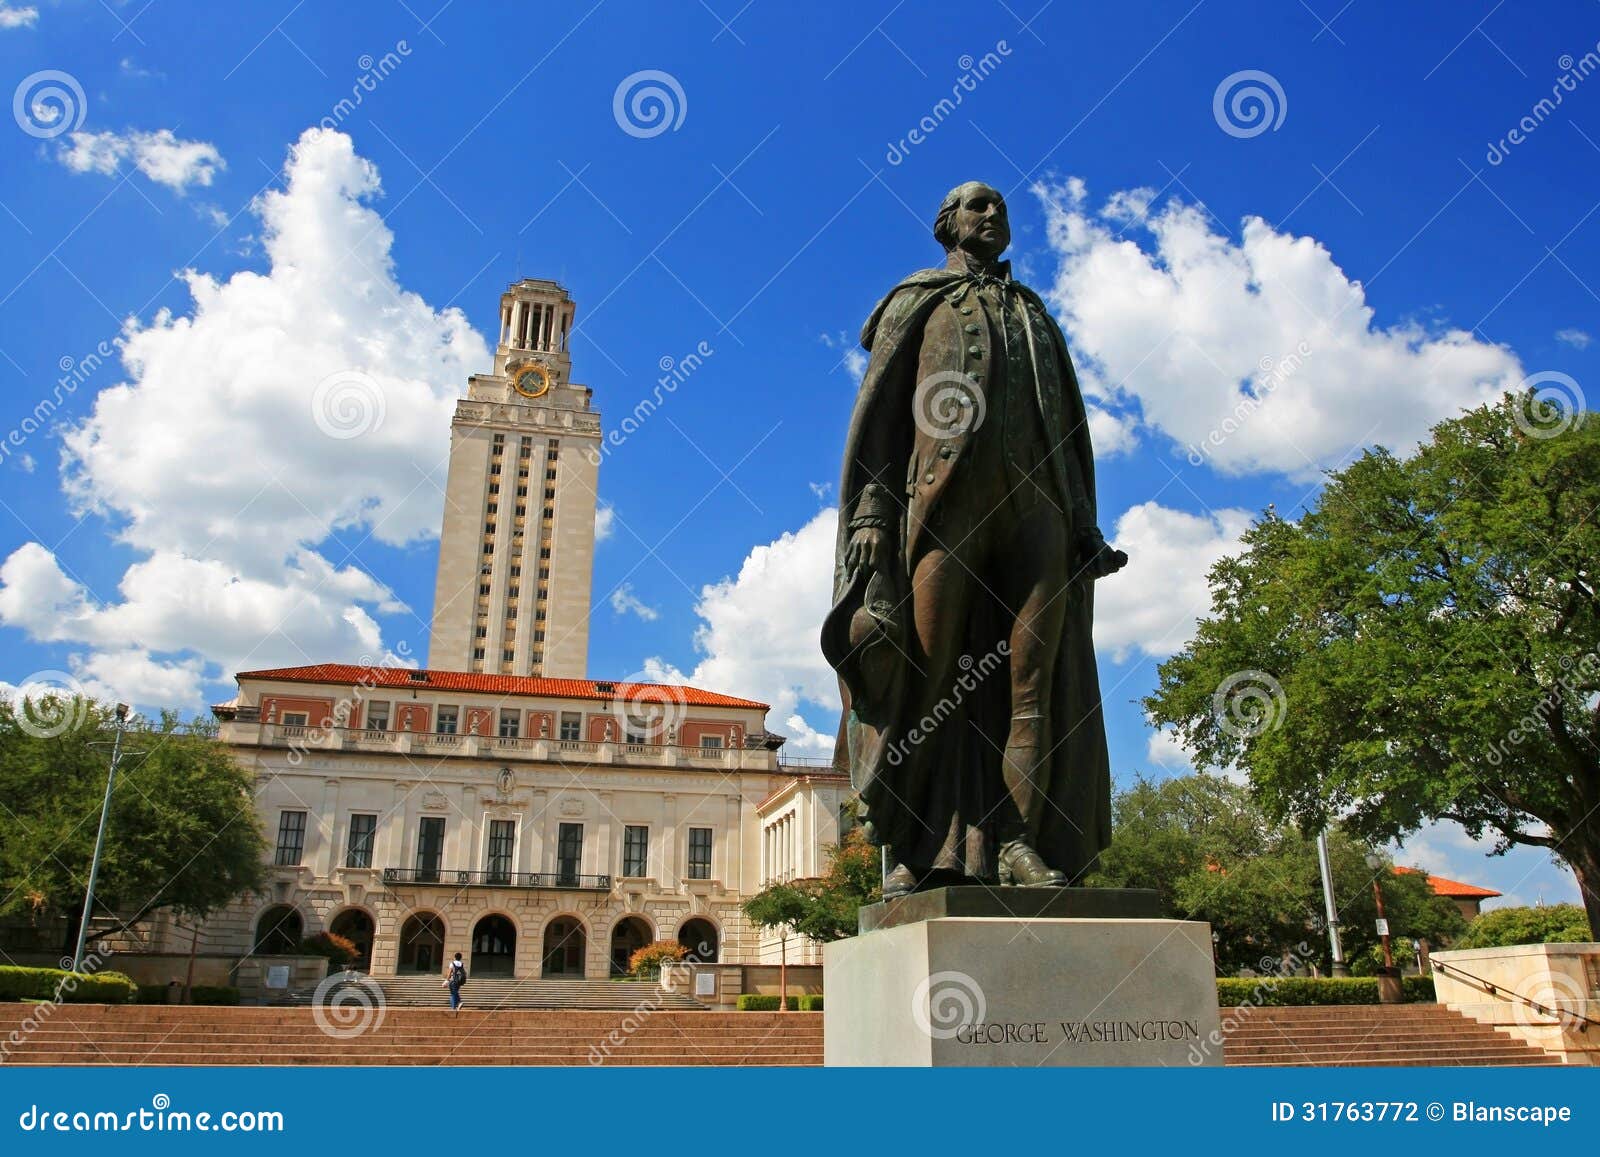 george-washington-statue-university-texas-jul-ut-against-blue-sky-austin-july-ut-founded-has-fifth-31763772.jpg